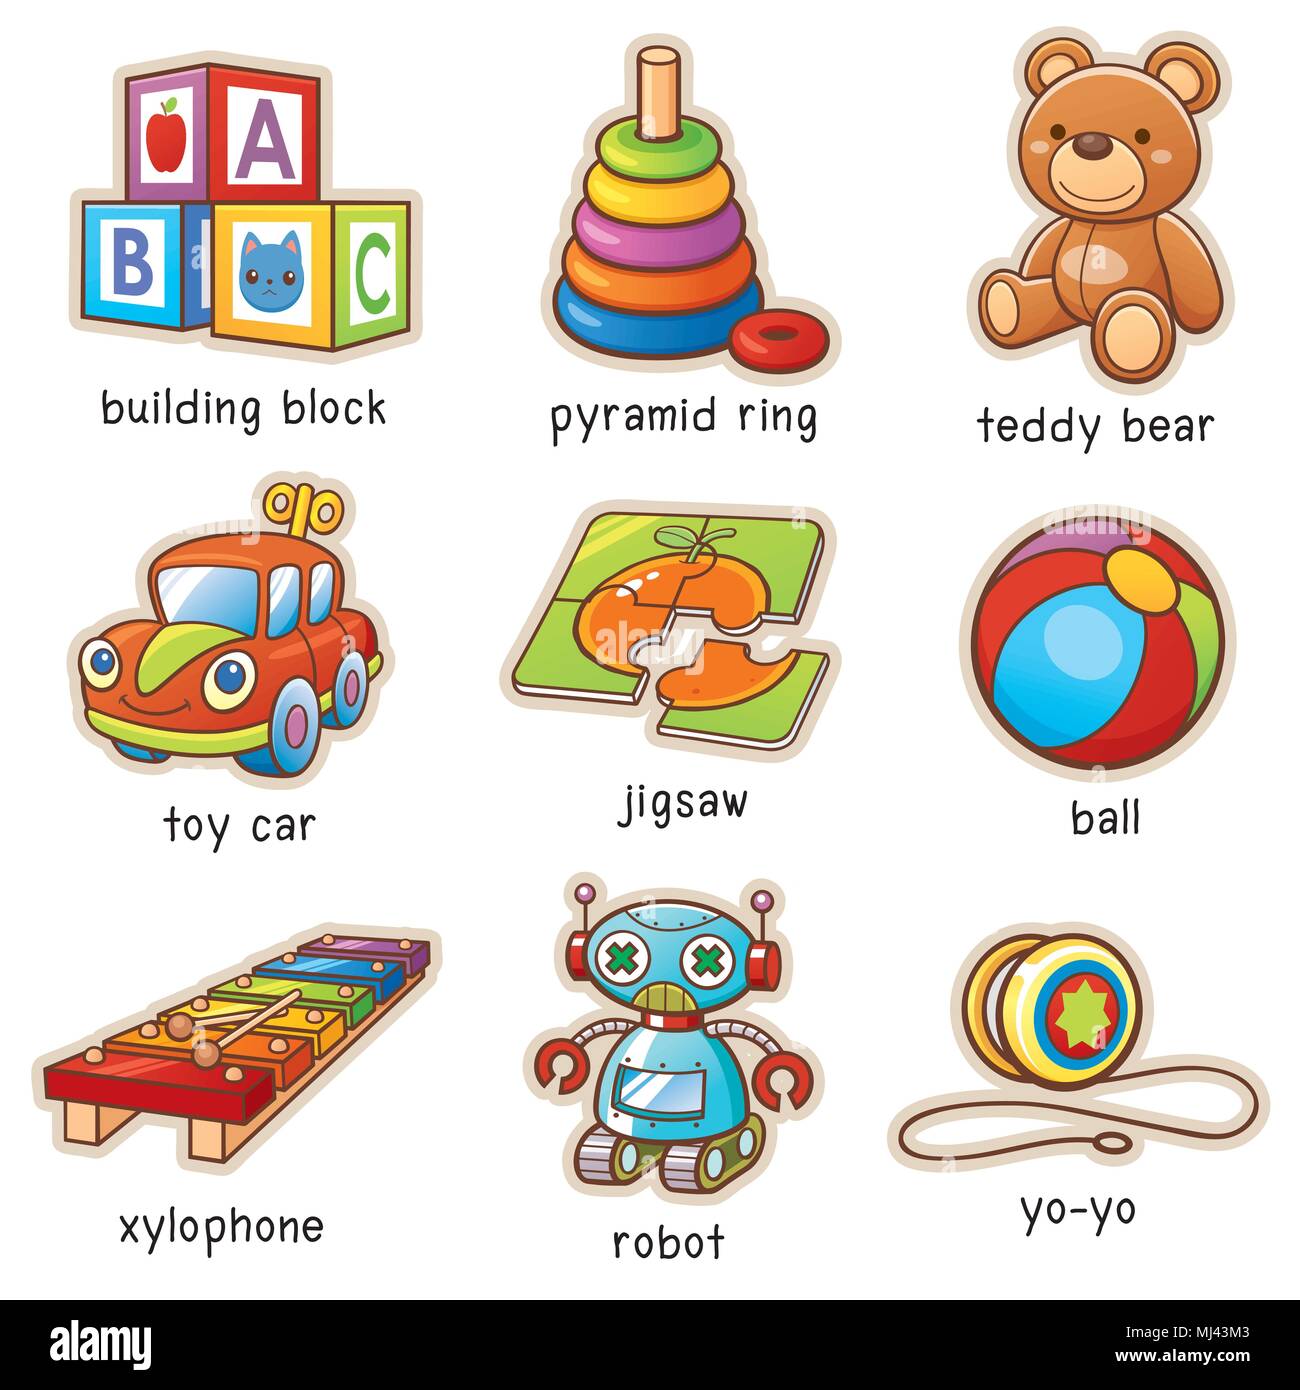 My toys слова. Игрушки на английском для детей. Игрушки карточки для детей. Toys английский для детей. Игрушки на английском карточки.